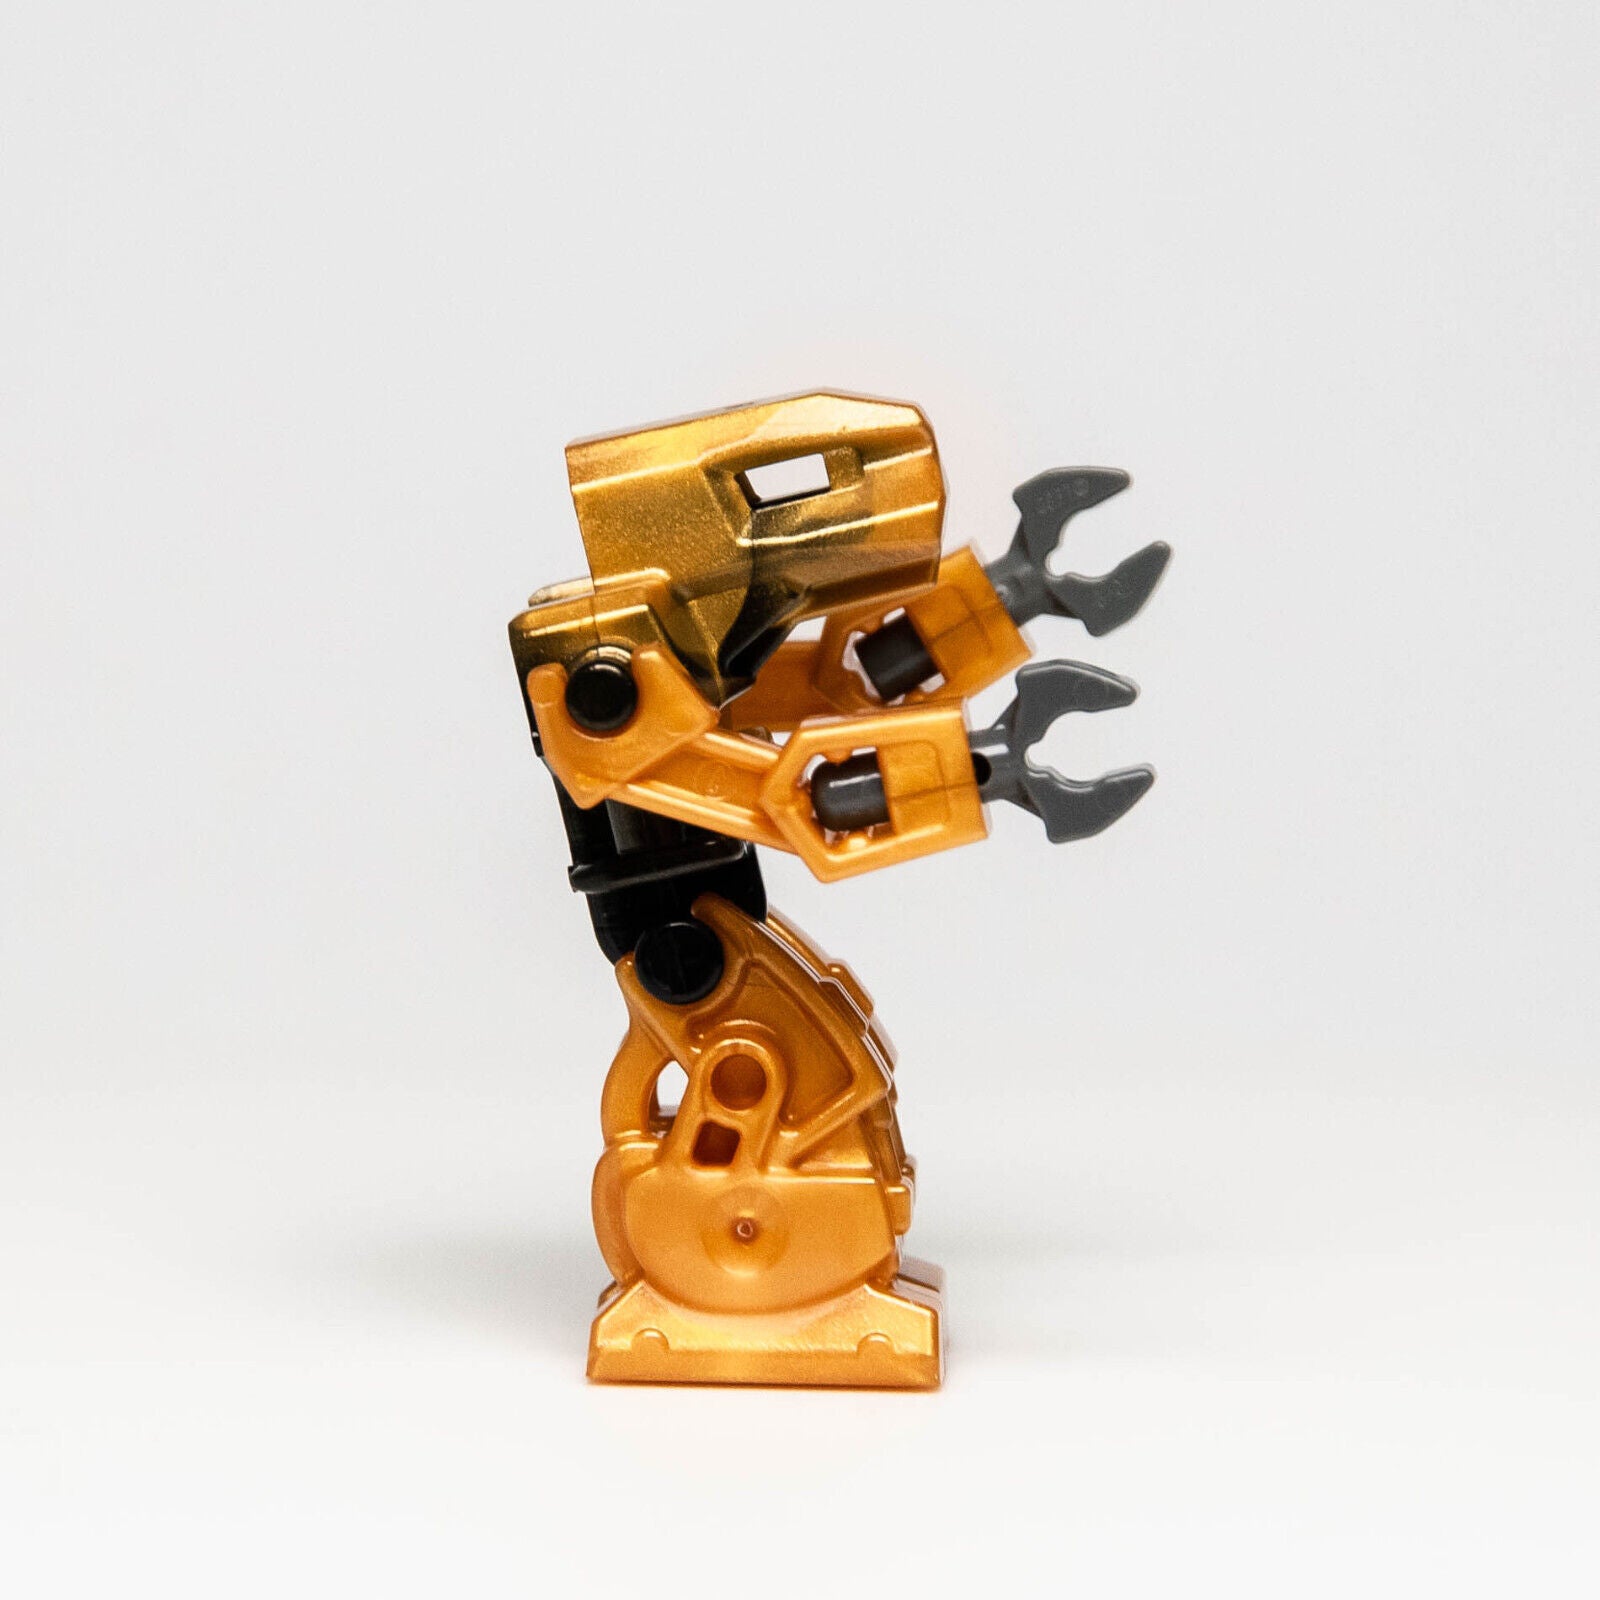 Lego Exo Force Minifigure - Meca One Gold Robot (exf012) 7713 8108 7709